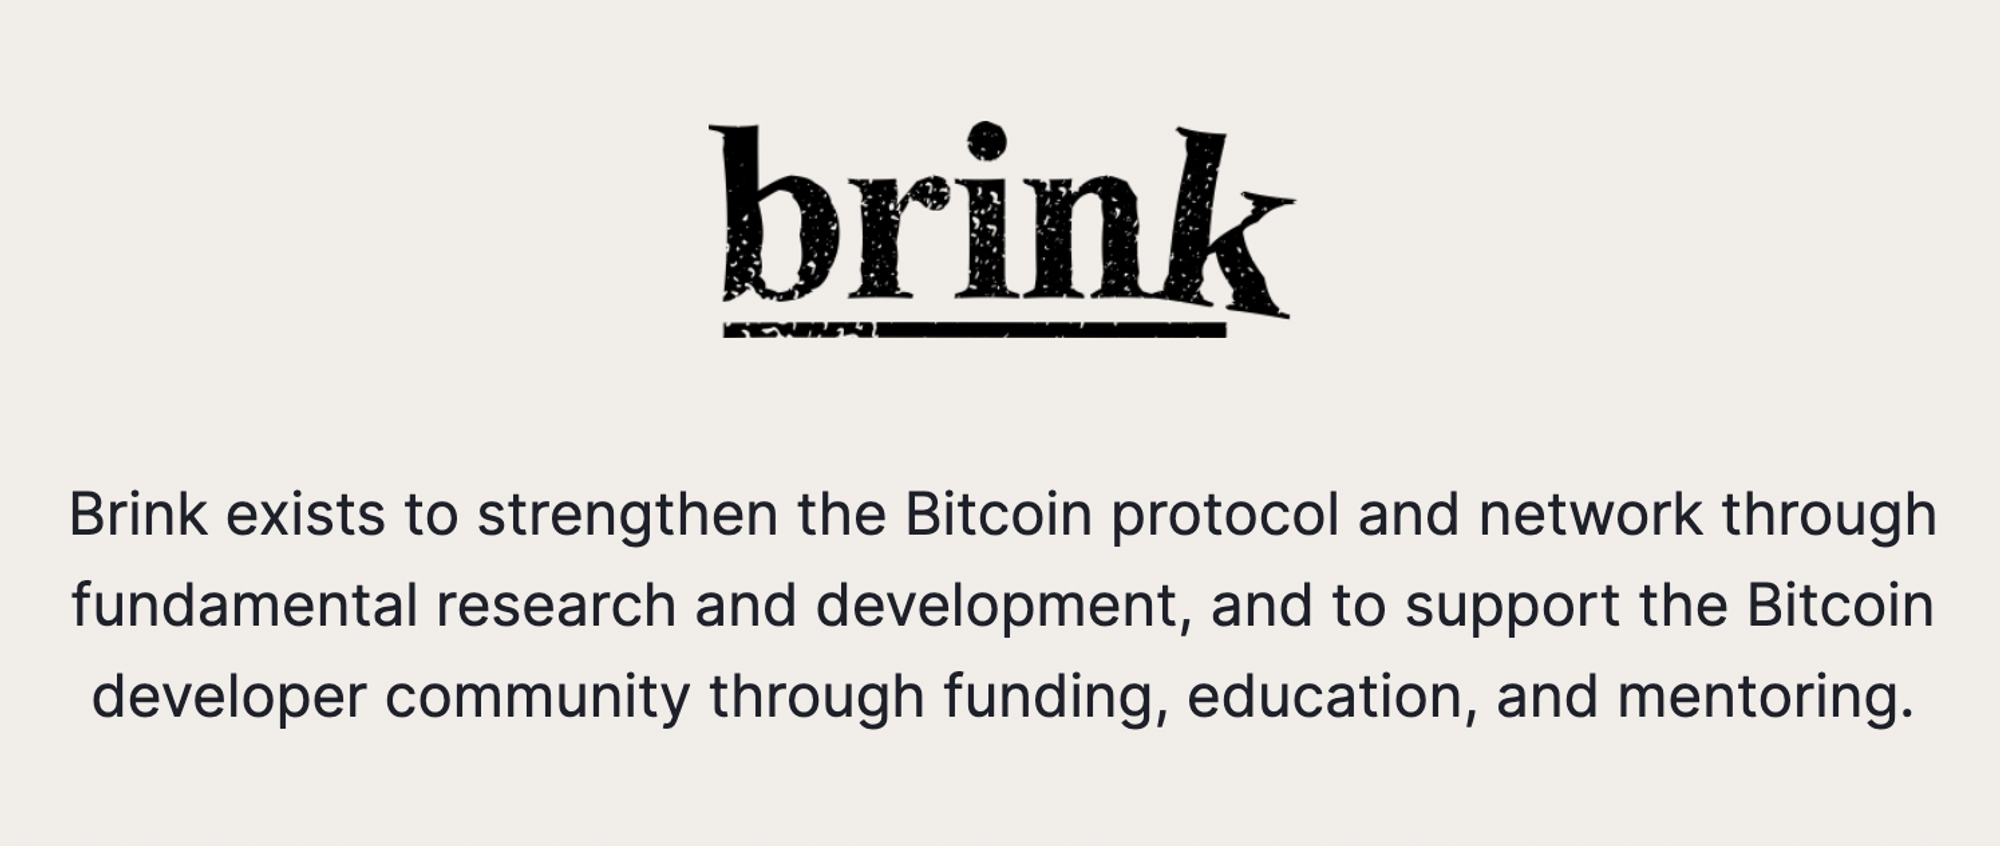 Brink Logo